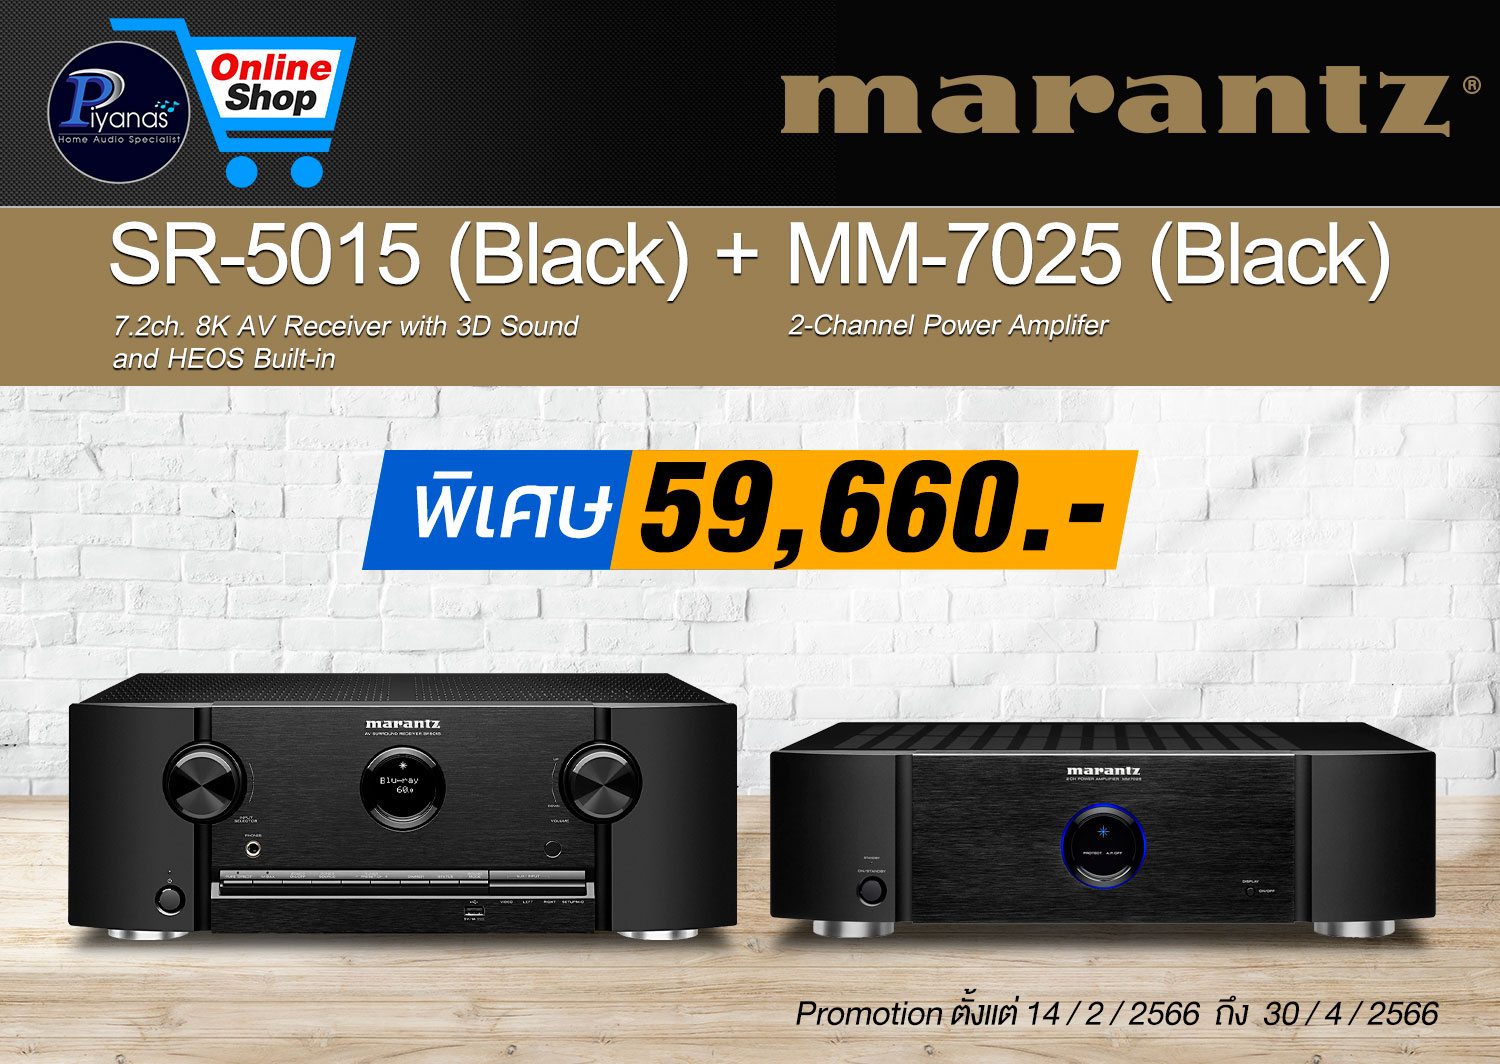 SR-5015 (Black) + MM-7025 (Black)